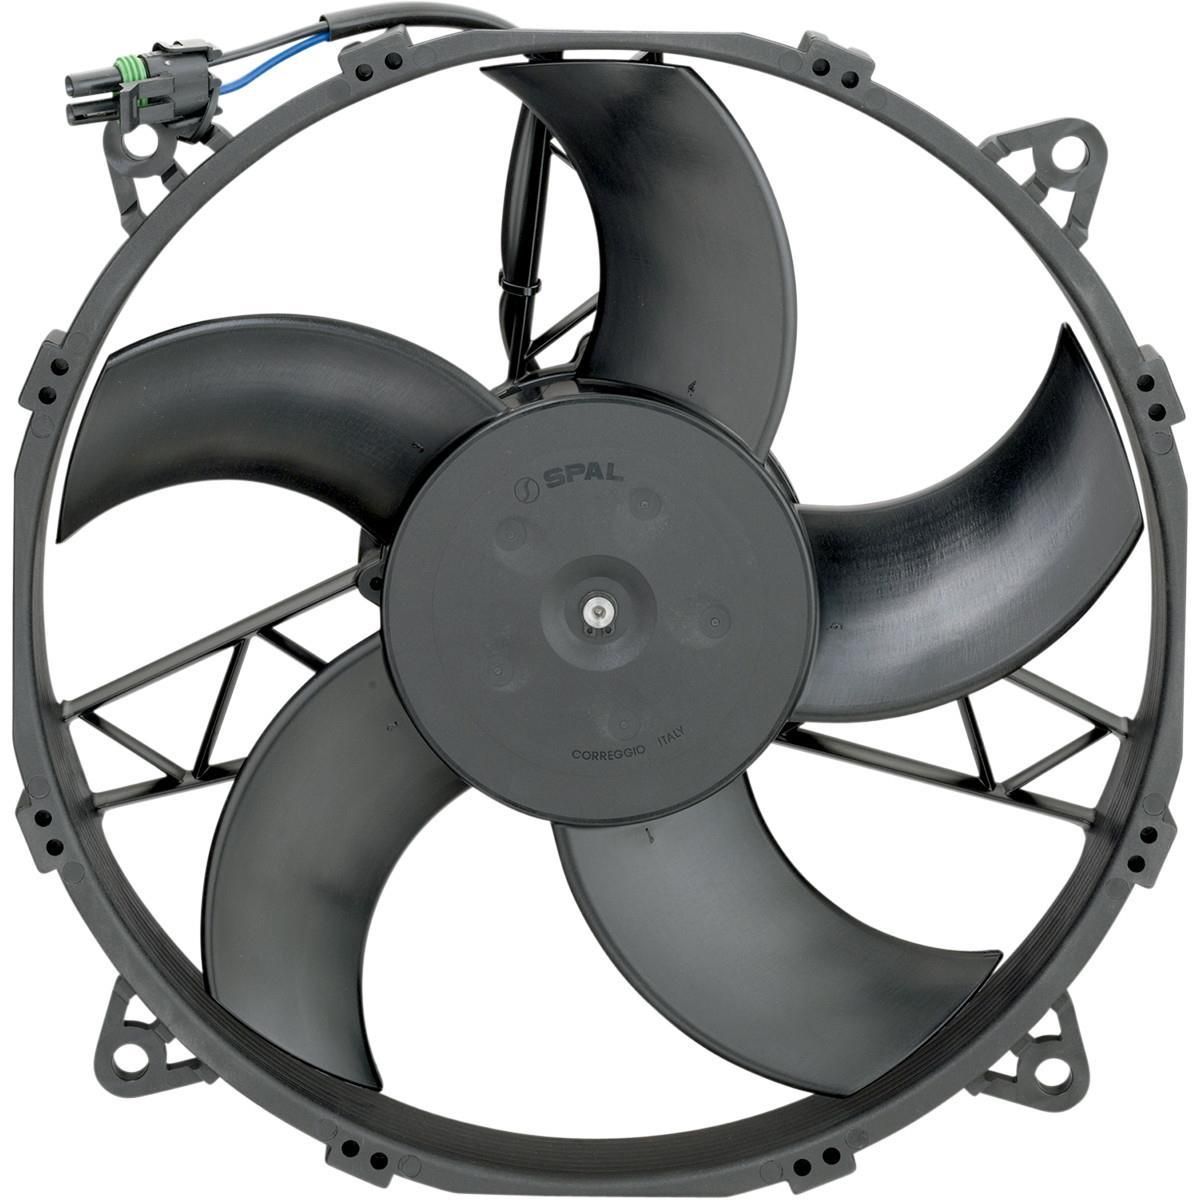 224S-MOOSE-UTILI-19010331 Hi-Performance Cooling Fan